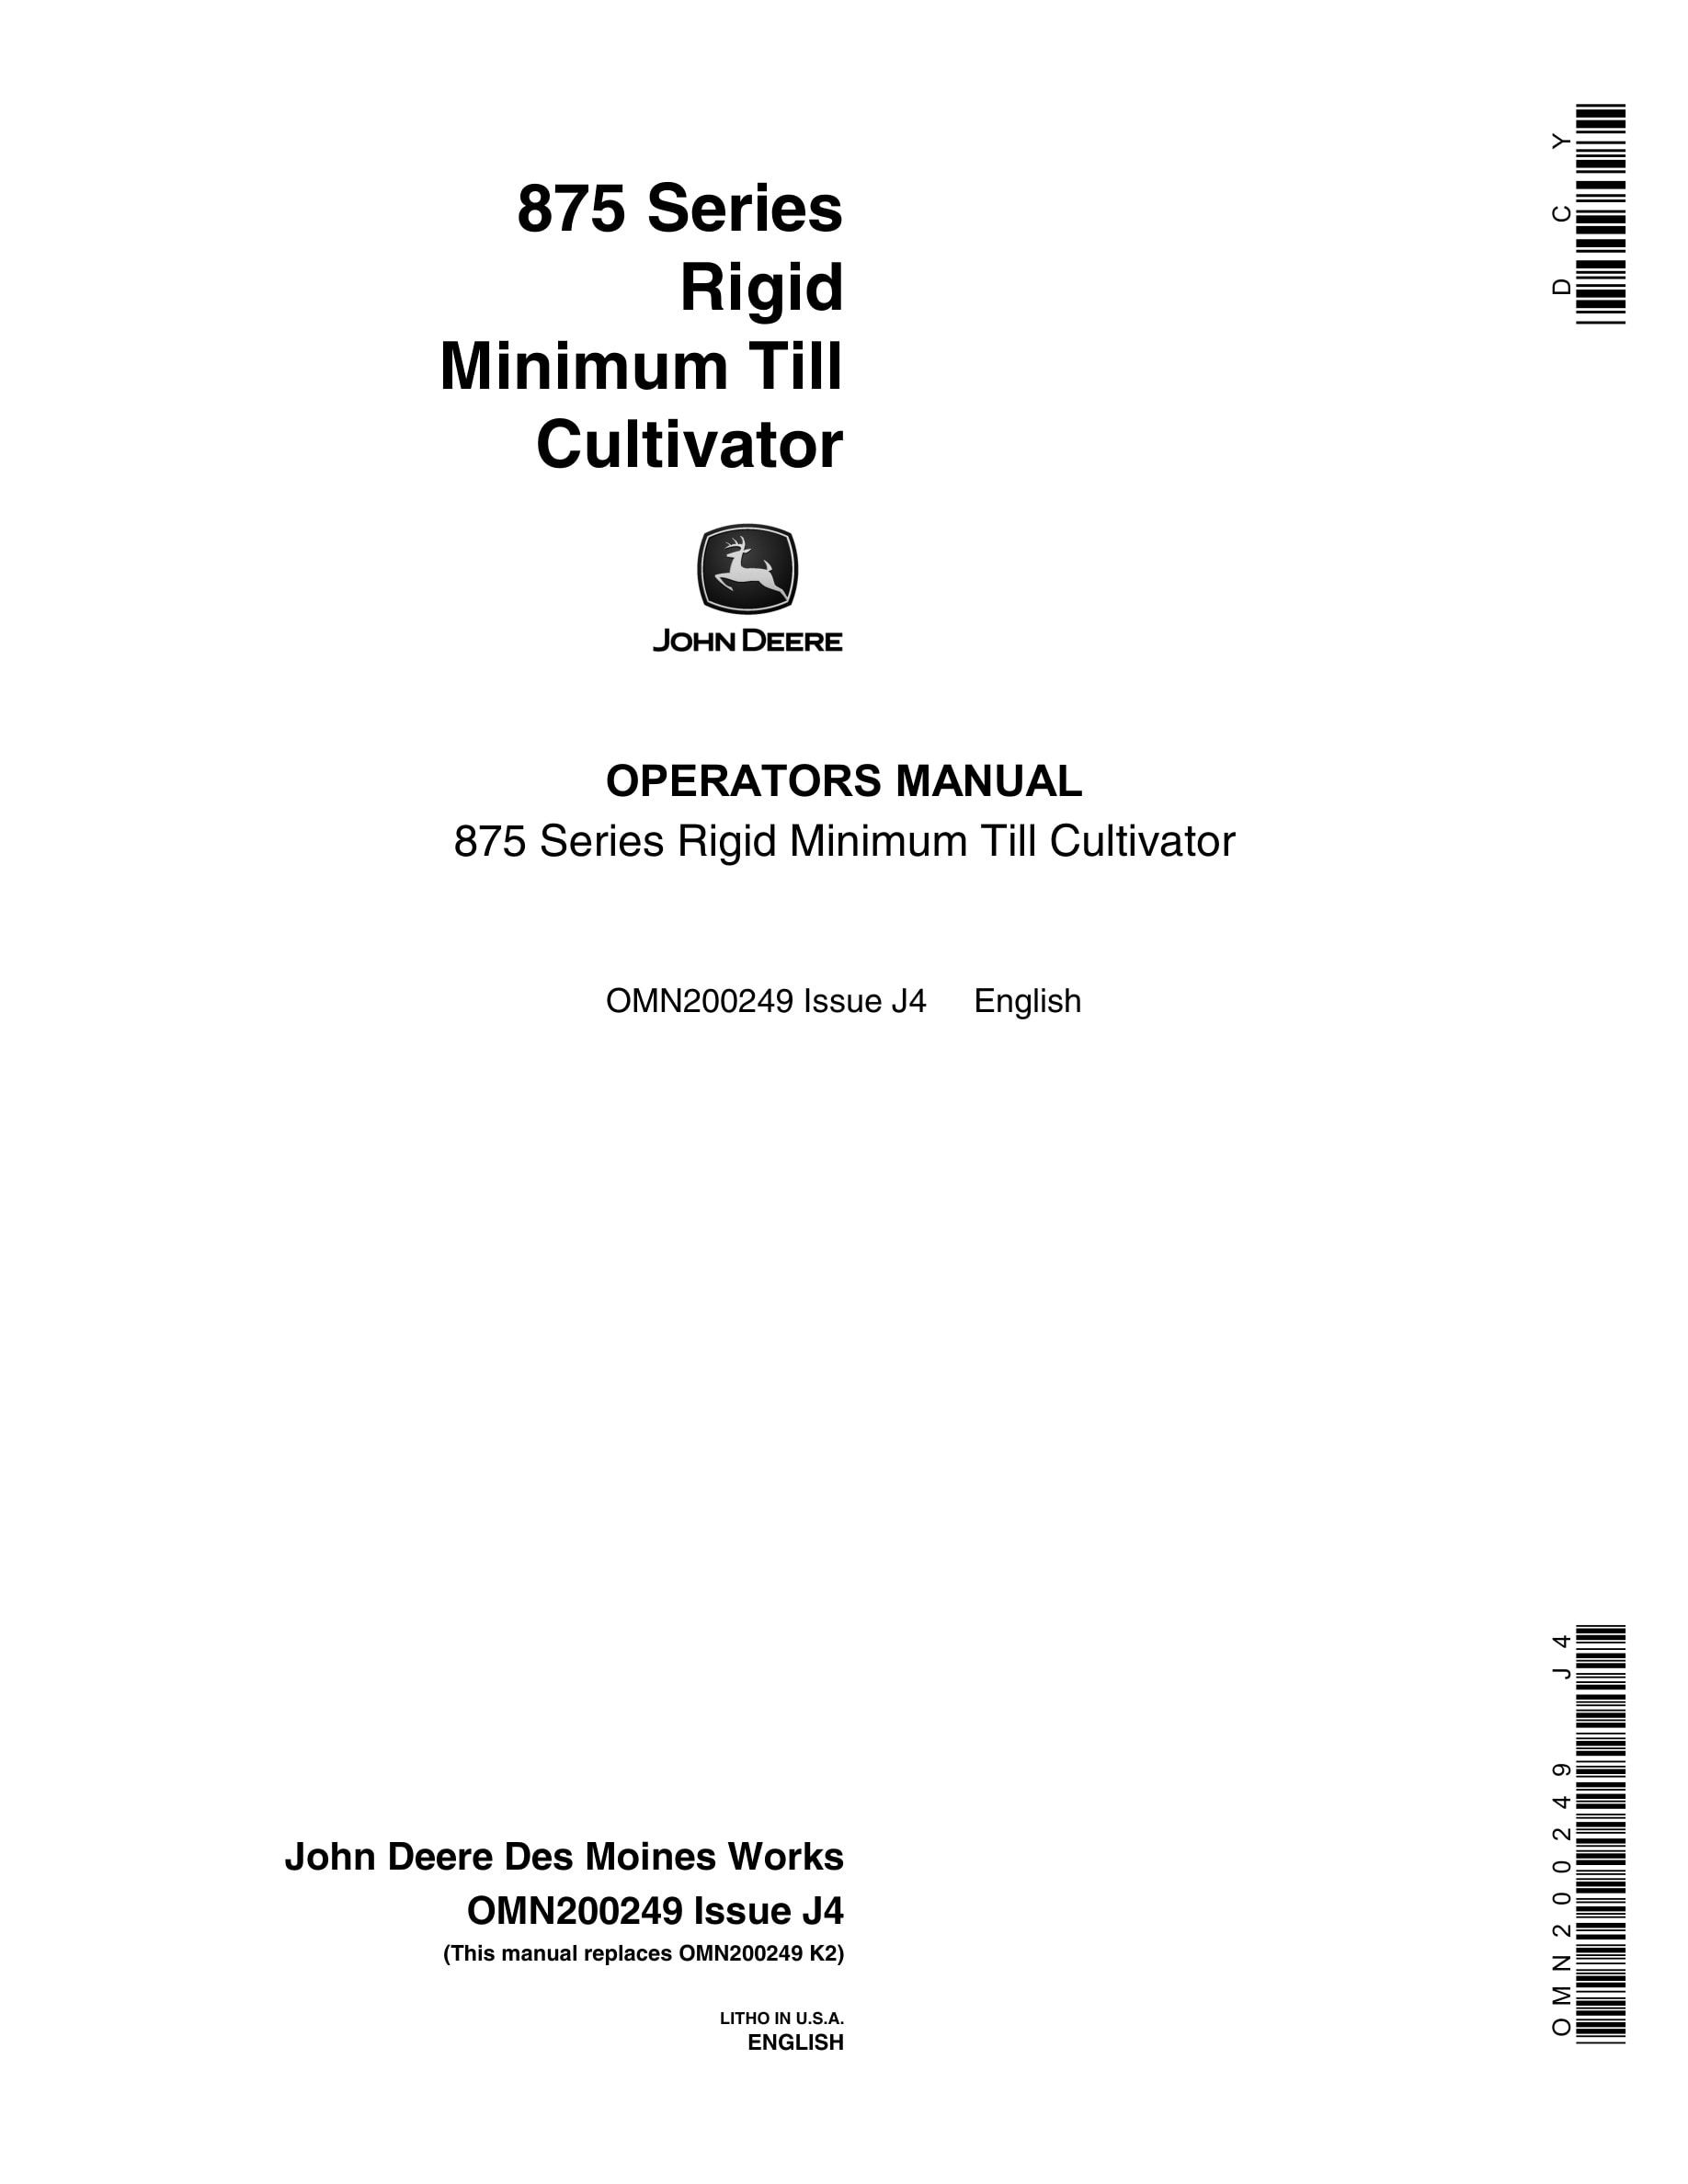 John Deere 875 Series Rigid Minimum Till CULTIVATOR Operator Manual OMN200249-1